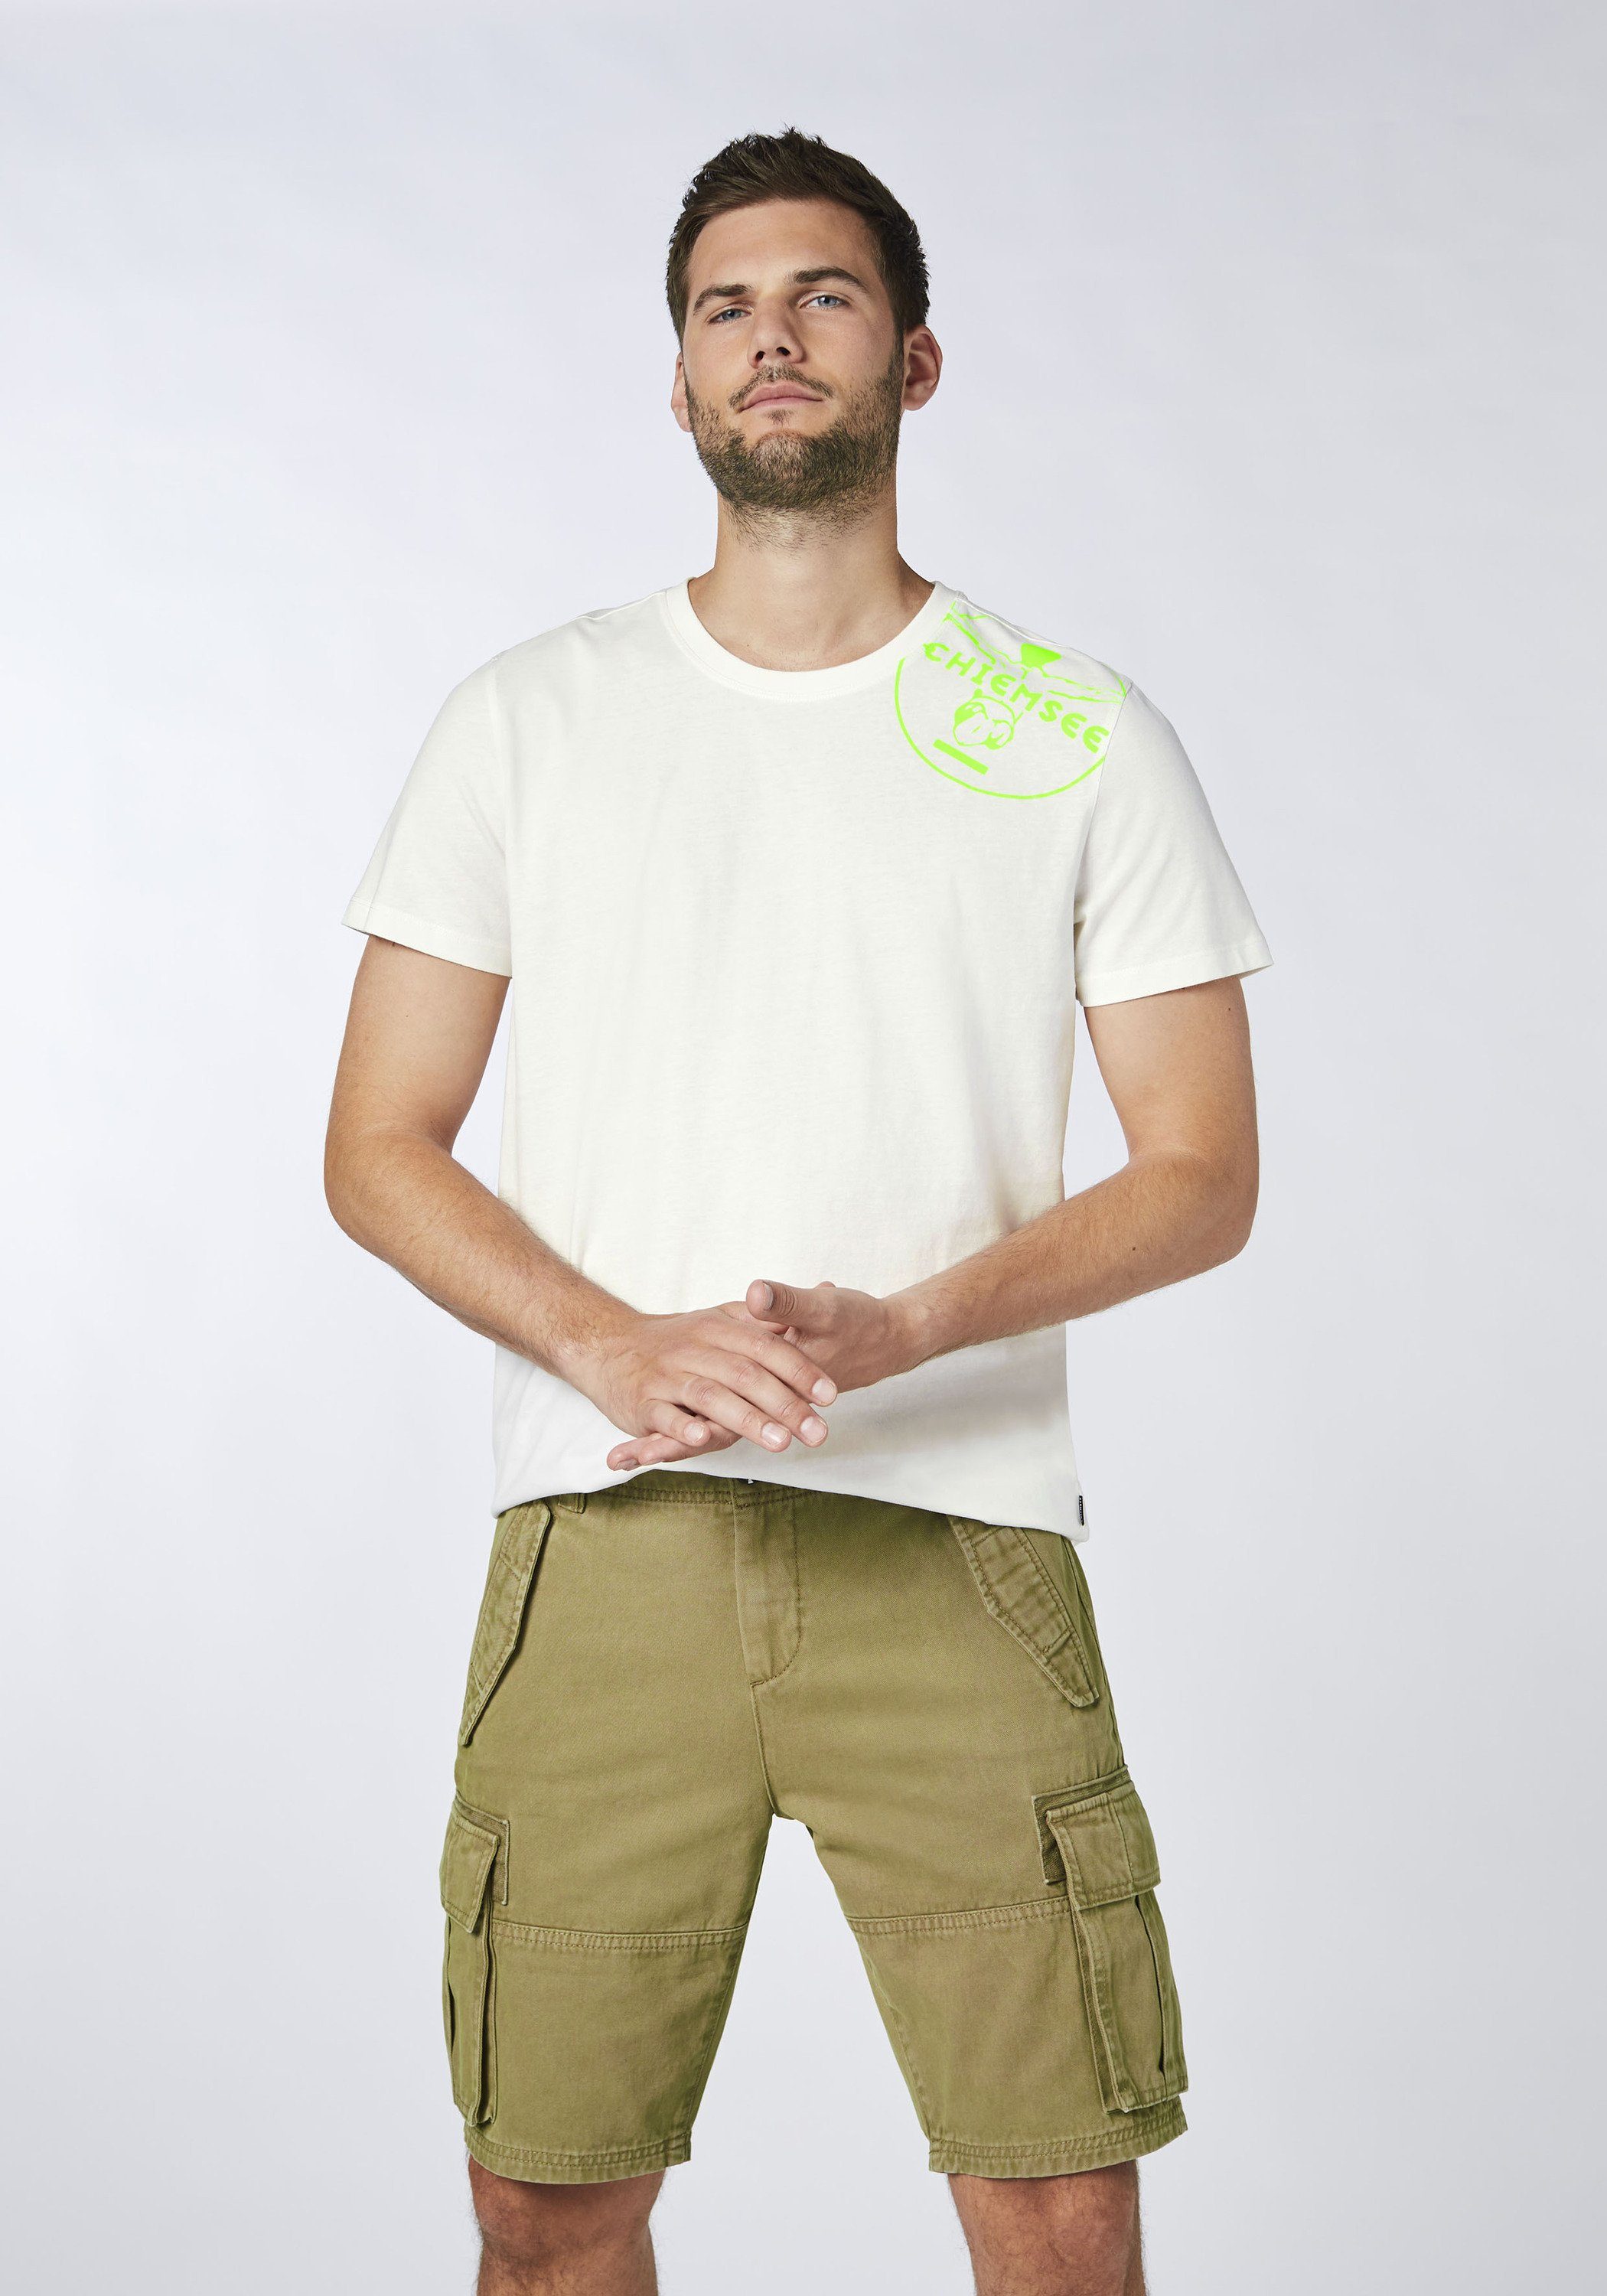 Chiemsee Print-Shirt T-Shirt Jumper-Motiv 1 Star White mit